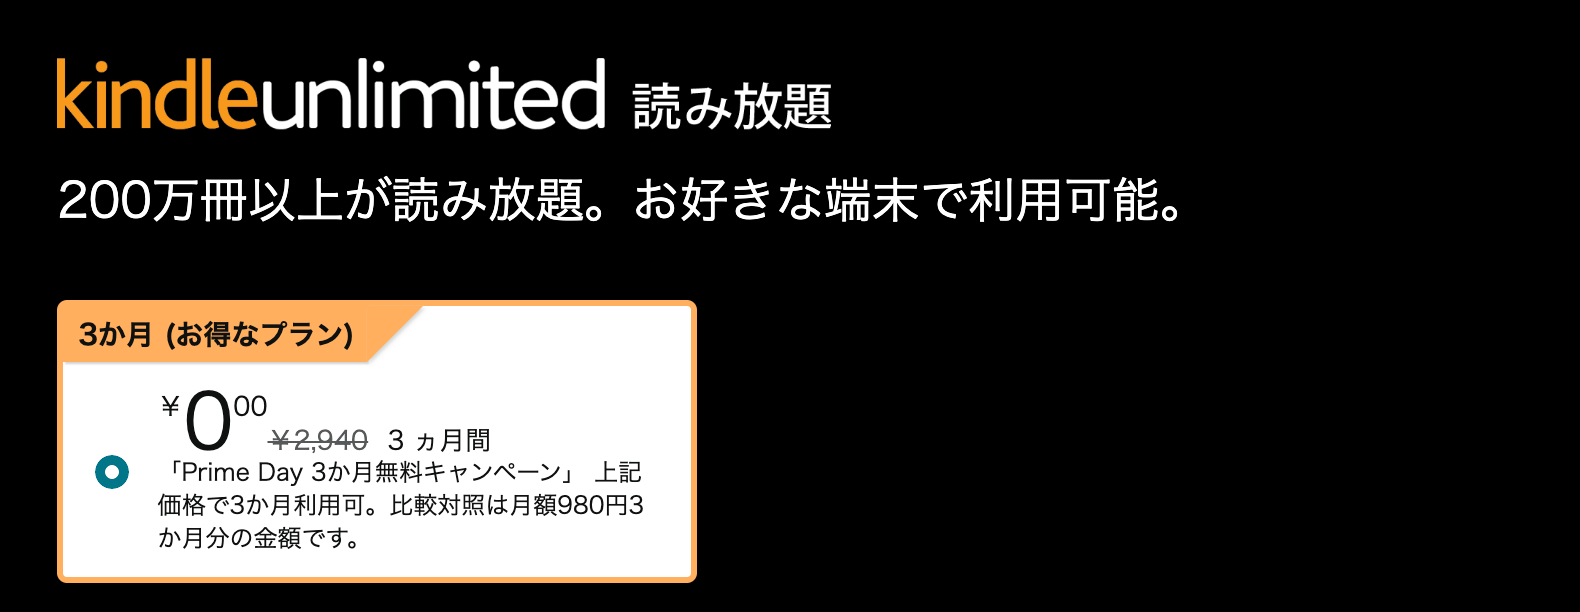 Kindle Unlimited 30日無料体験キャンペーン